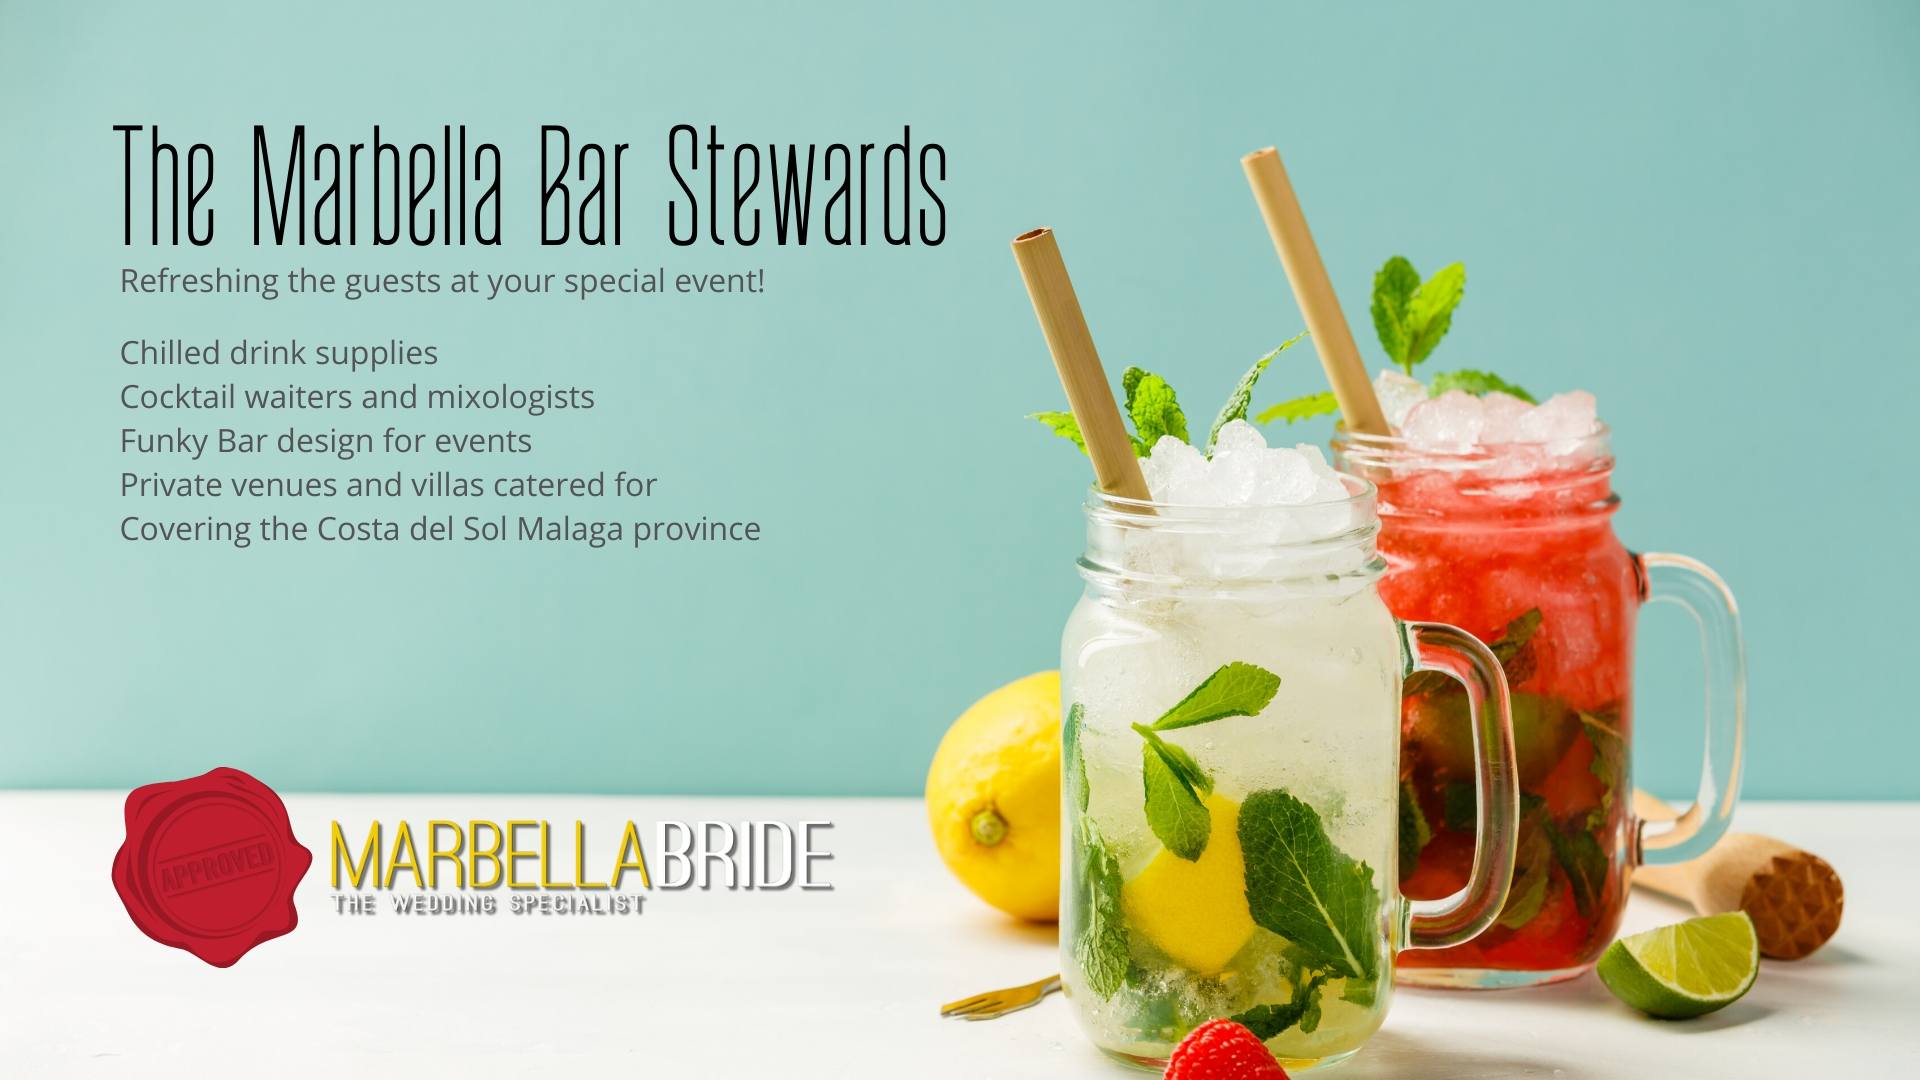 Marbella Bar people drink suppliers